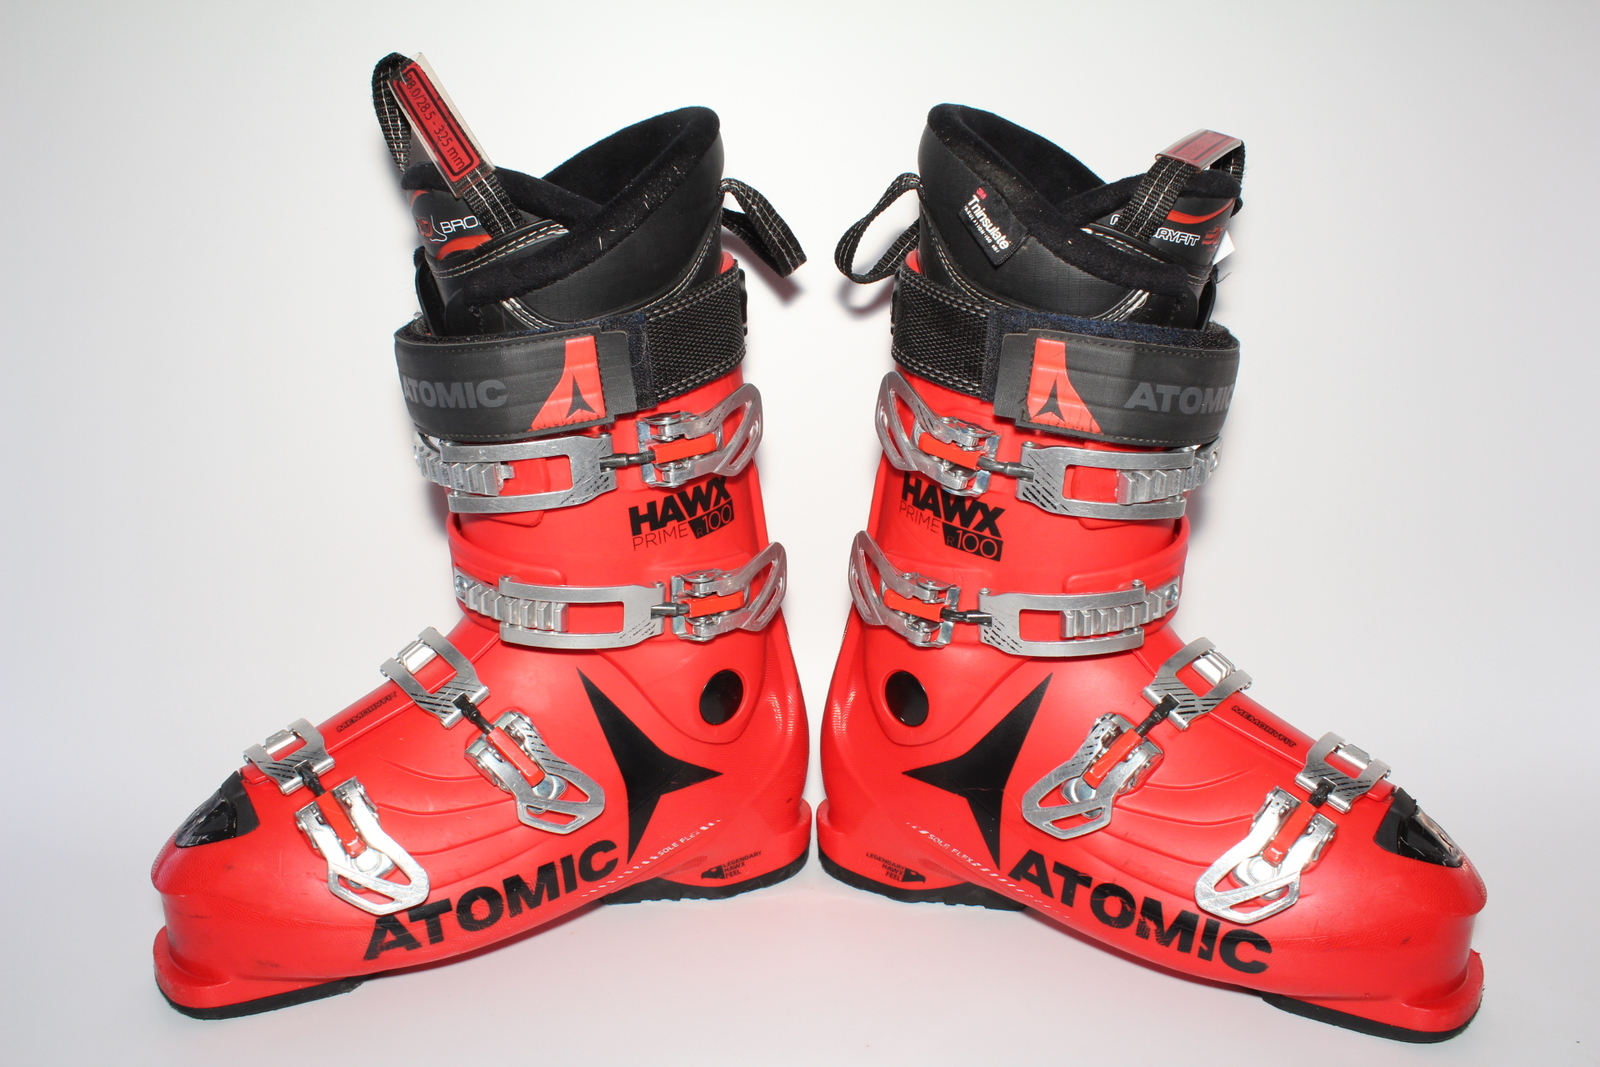 Lyžařské boty Atomic Hawx Prime R 100 vel. EU43.5 flexe 100